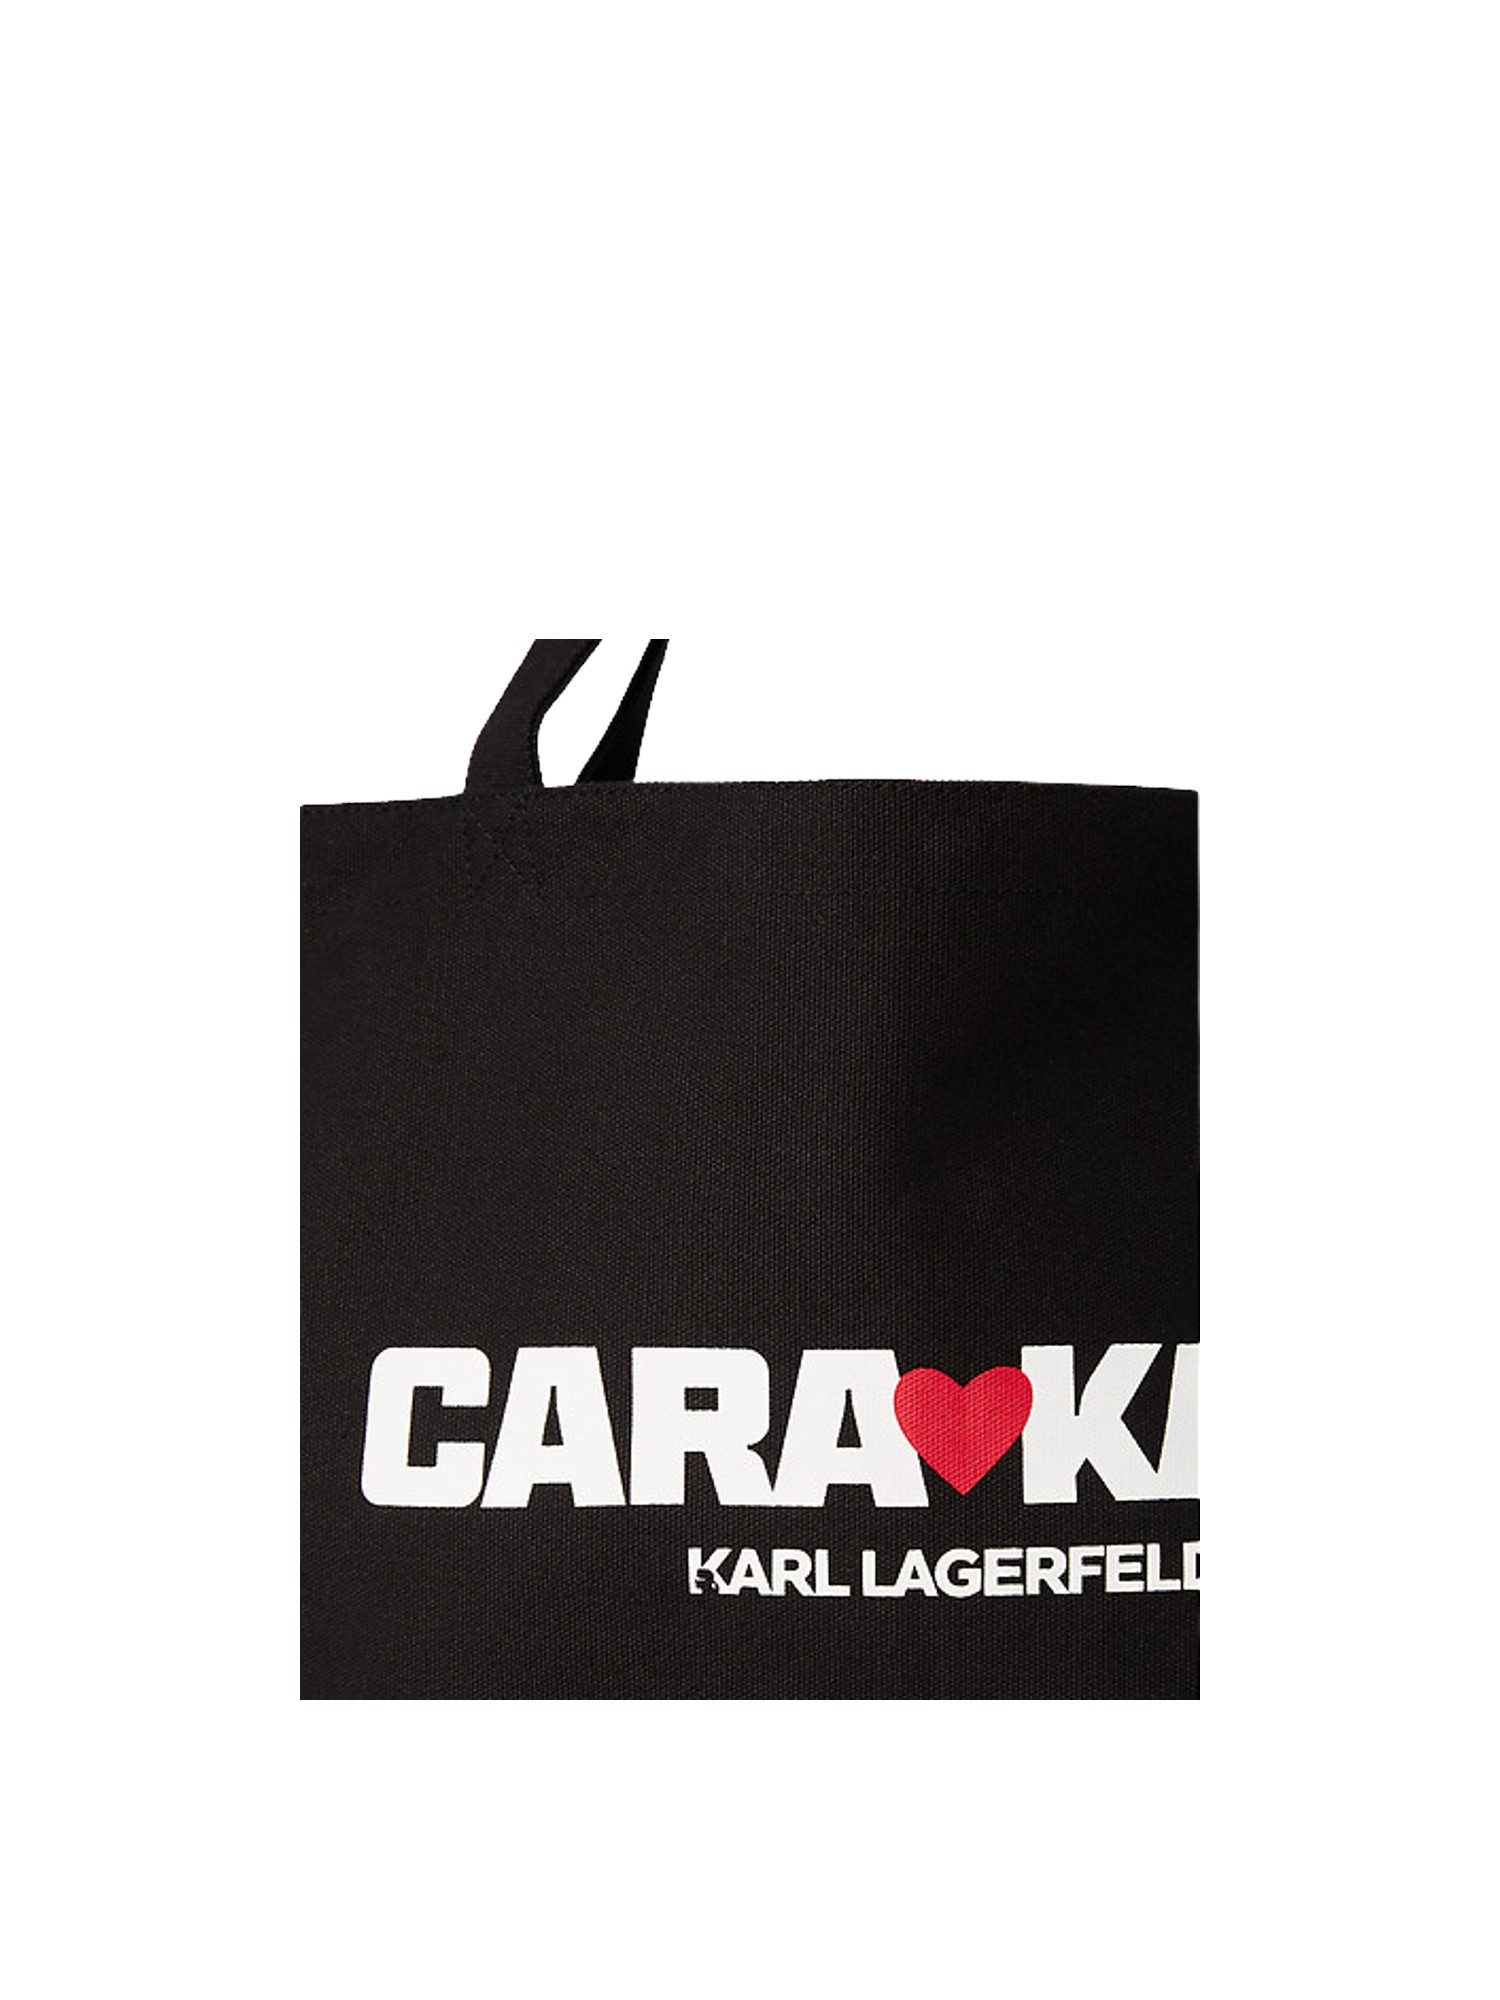 Karl Lagerfeld - Cara loves karl shopper in tela, Nero, large image number 4